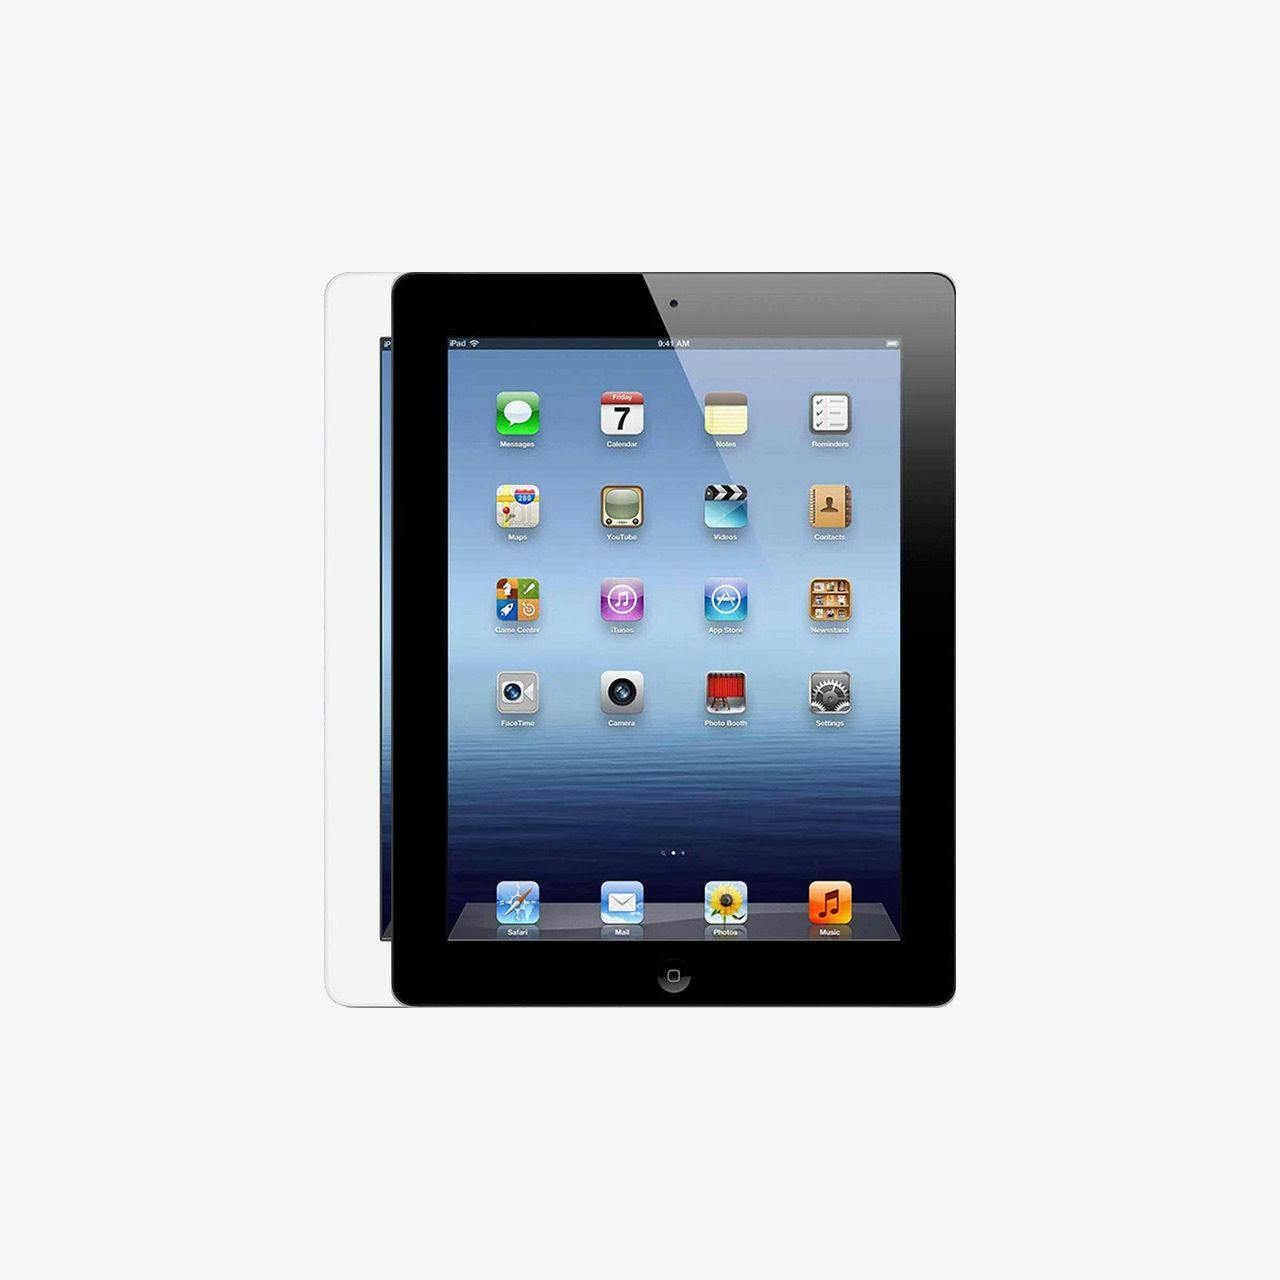 Image of iPad 2nd Generation.